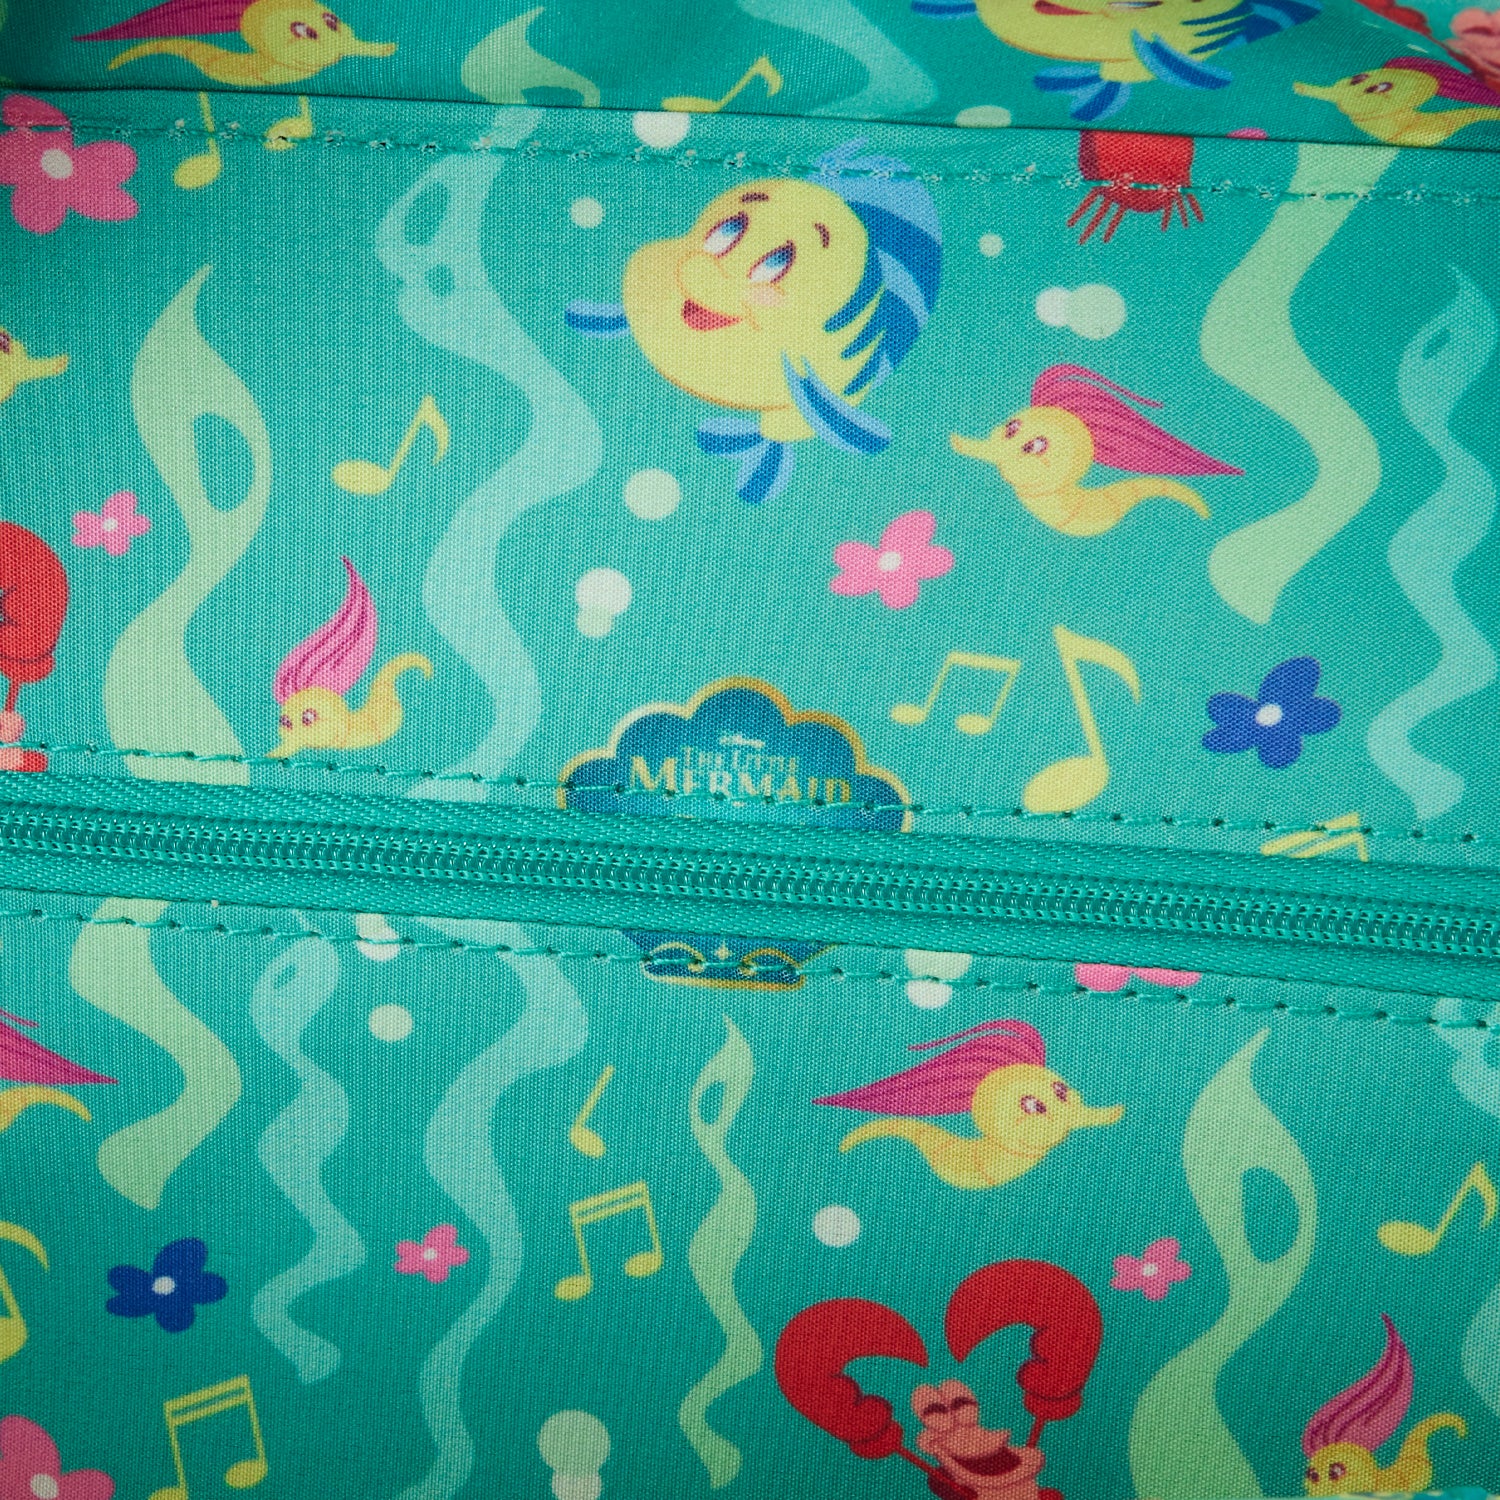 Loungefly Disney The Little Mermaid 35th Anniversary Ariel Face Crossbody Bag